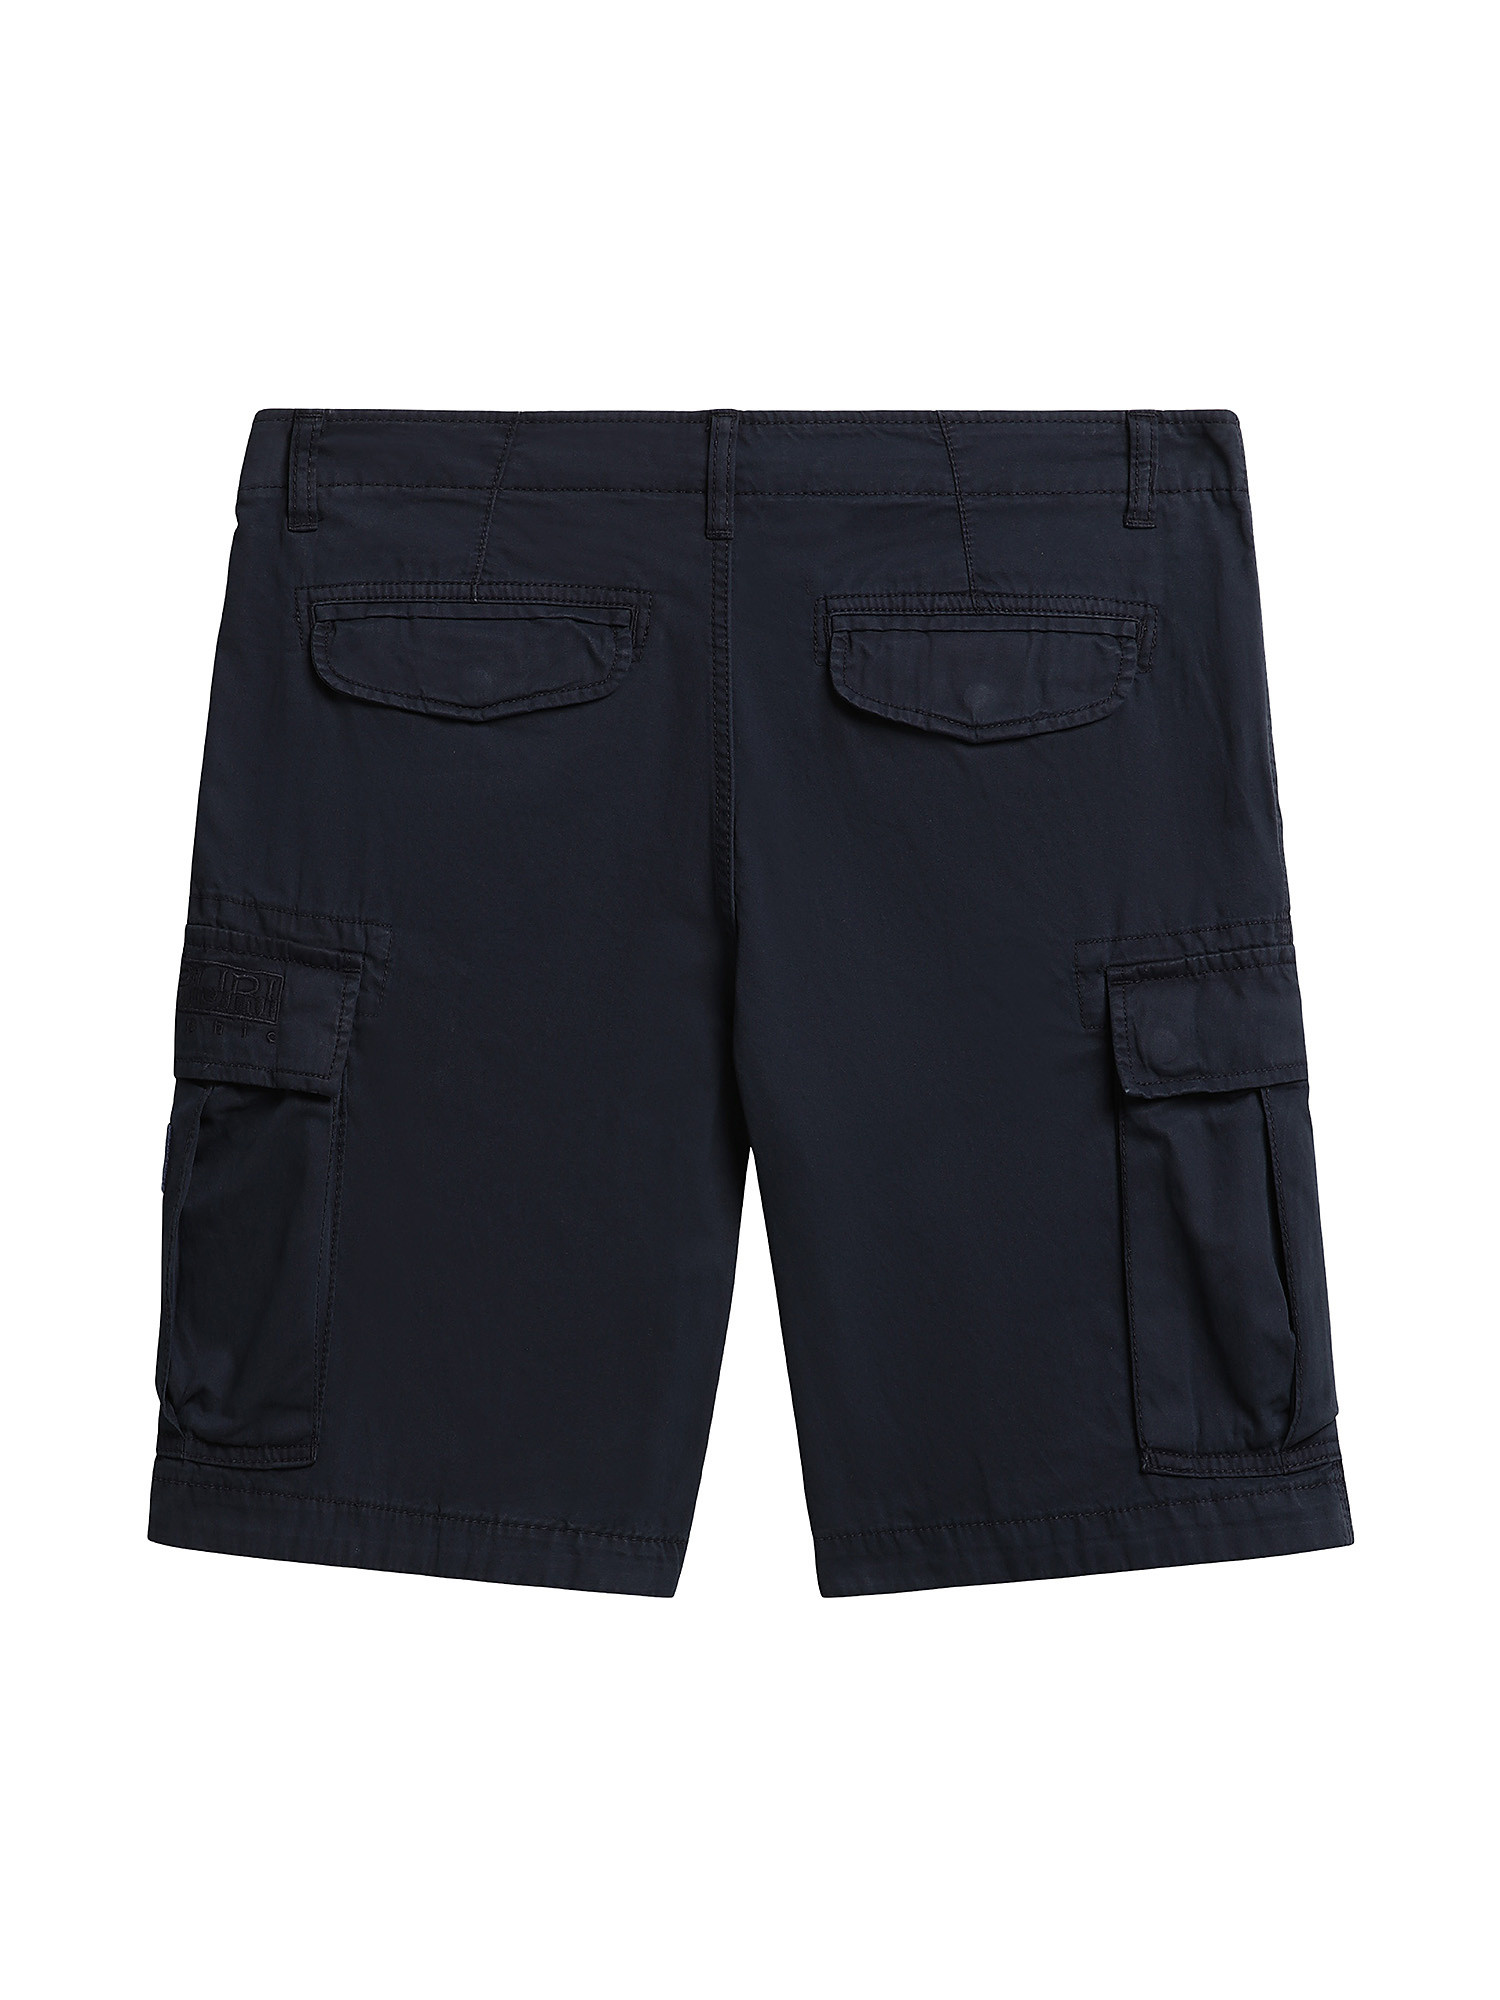 Pantaloni Bermuda Nus, Blu, large image number 1